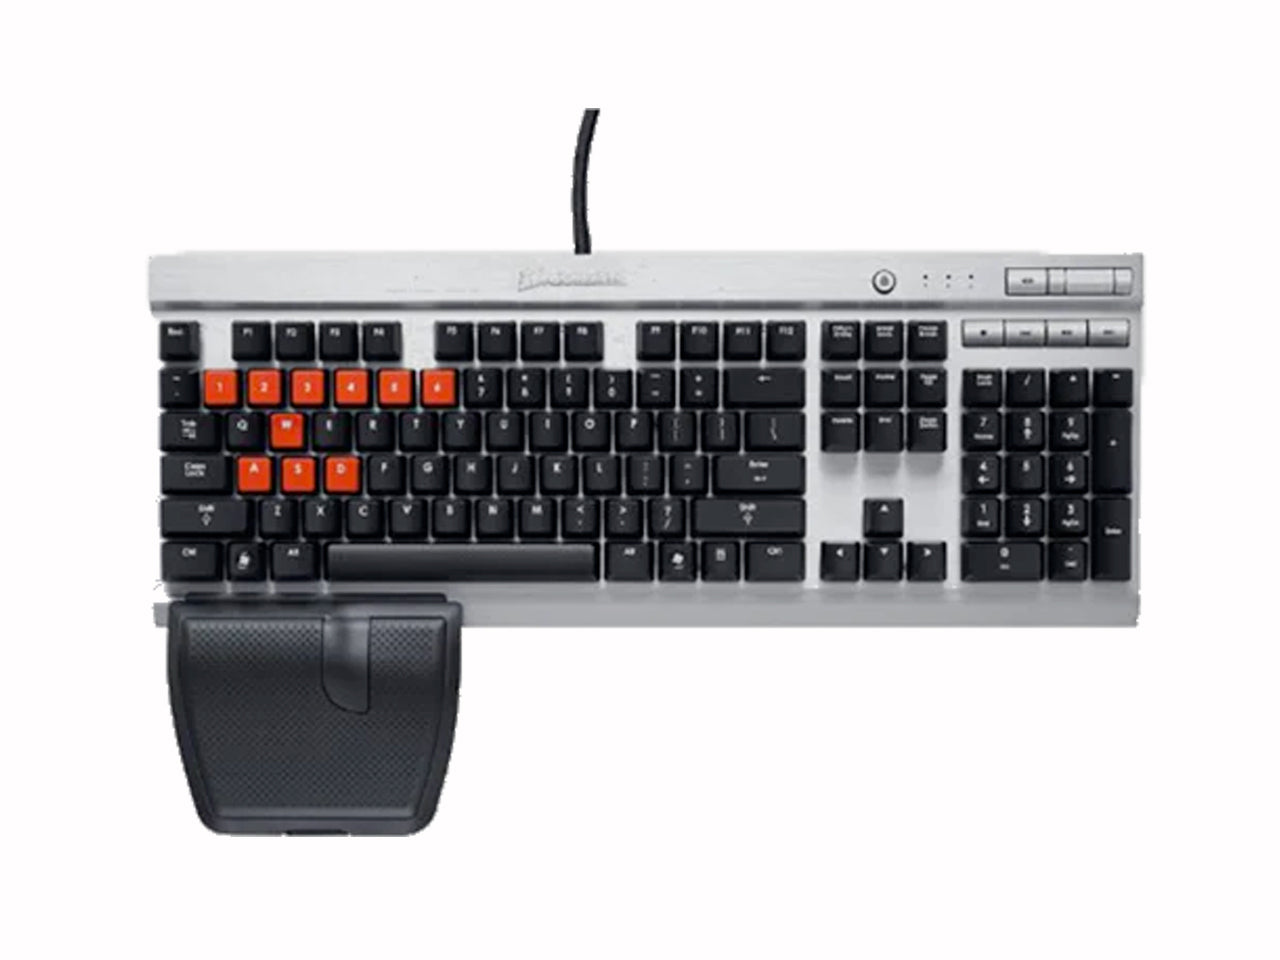 Corsair K70 Mechanical Gaming Keyboard